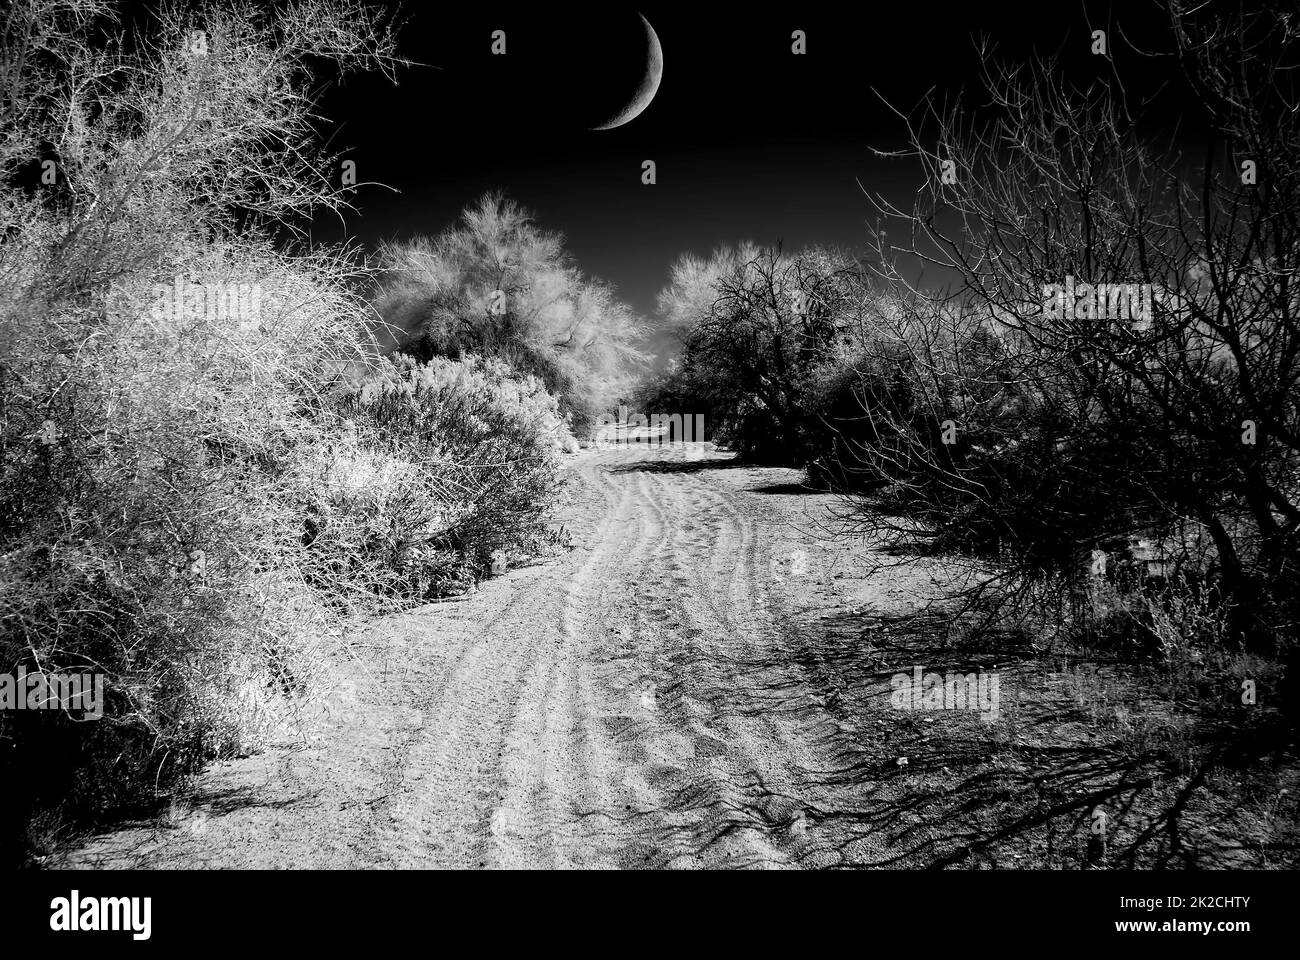 Arizona Sonora Desert road with Moon in infrared monochrome Stock Photo